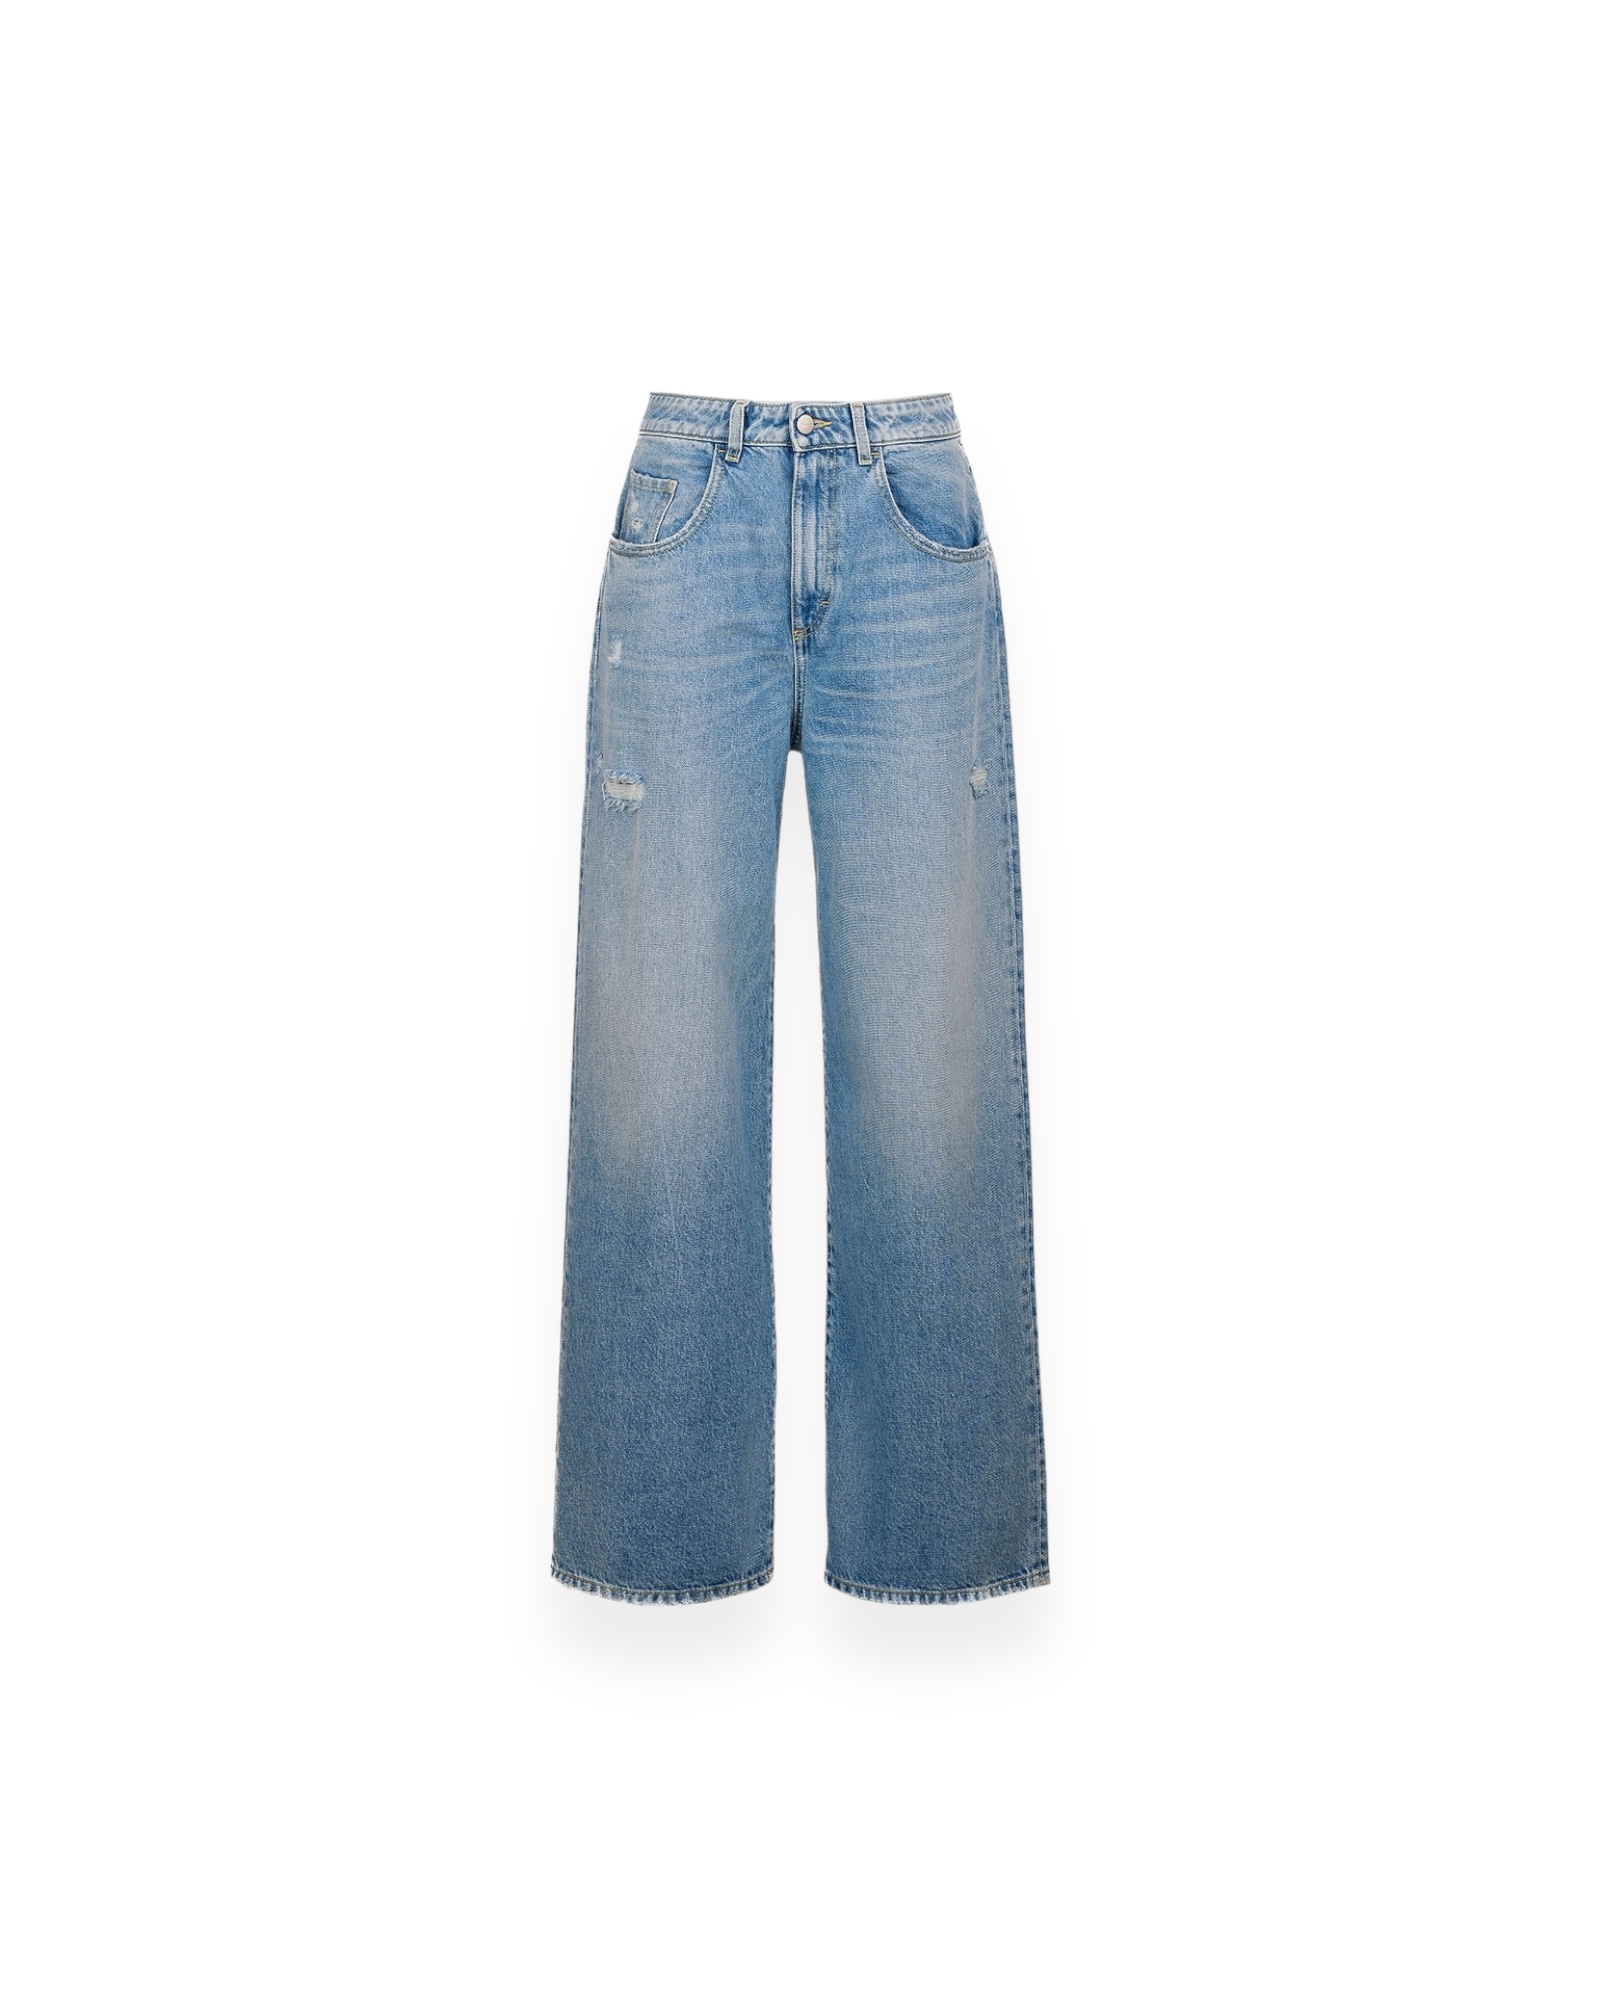 Jeans Poppy in light blue, Icon Denim, ID894